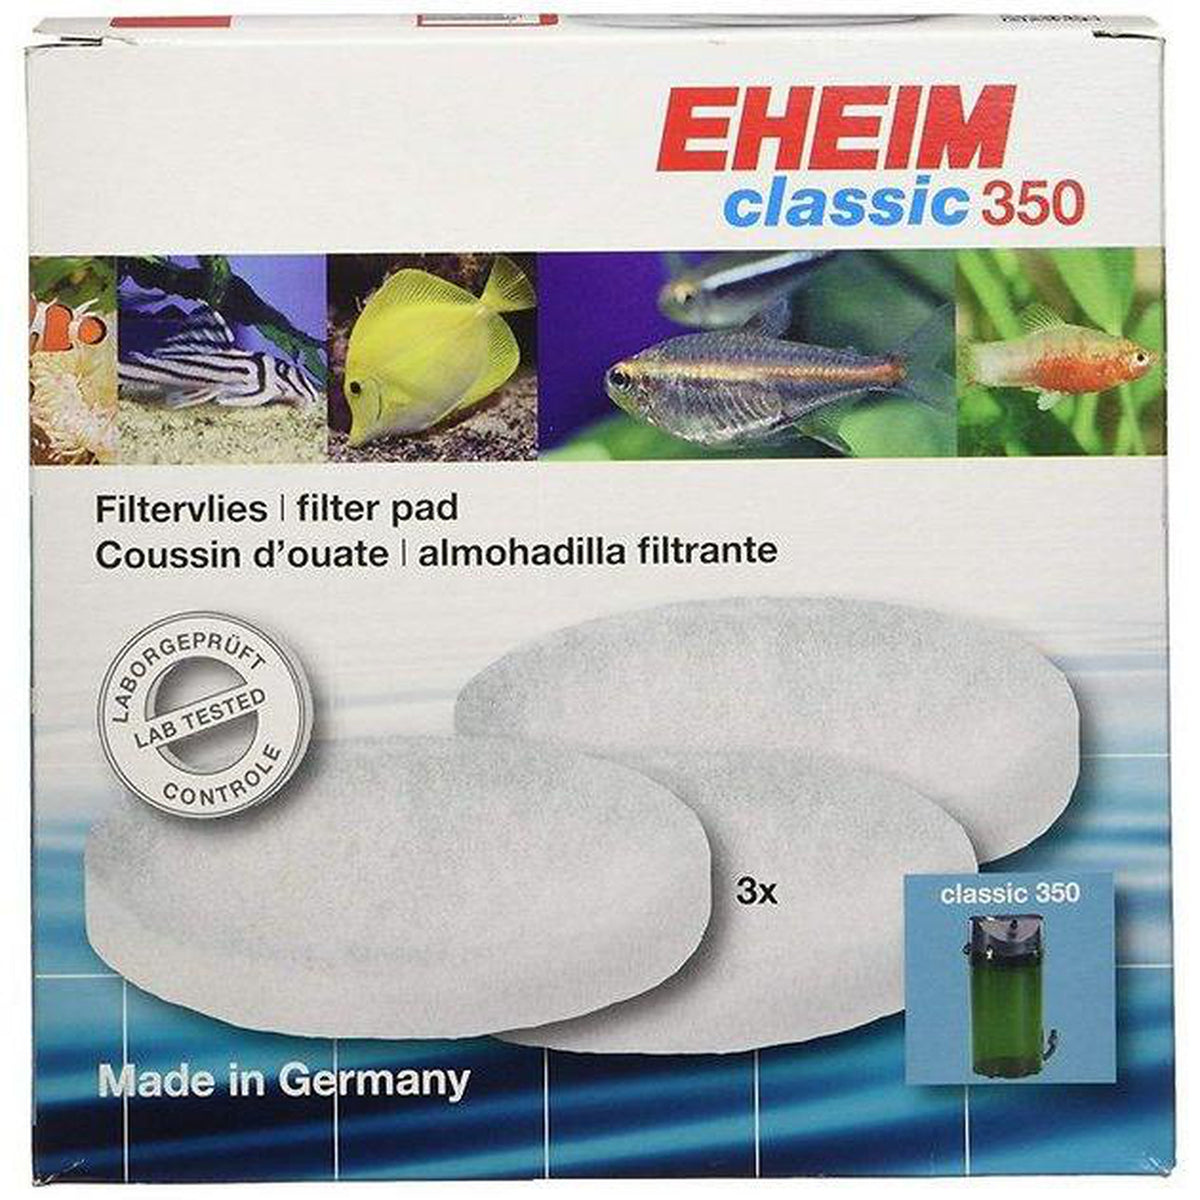 Eheim Classic 350 Filter Pad 3 Pack